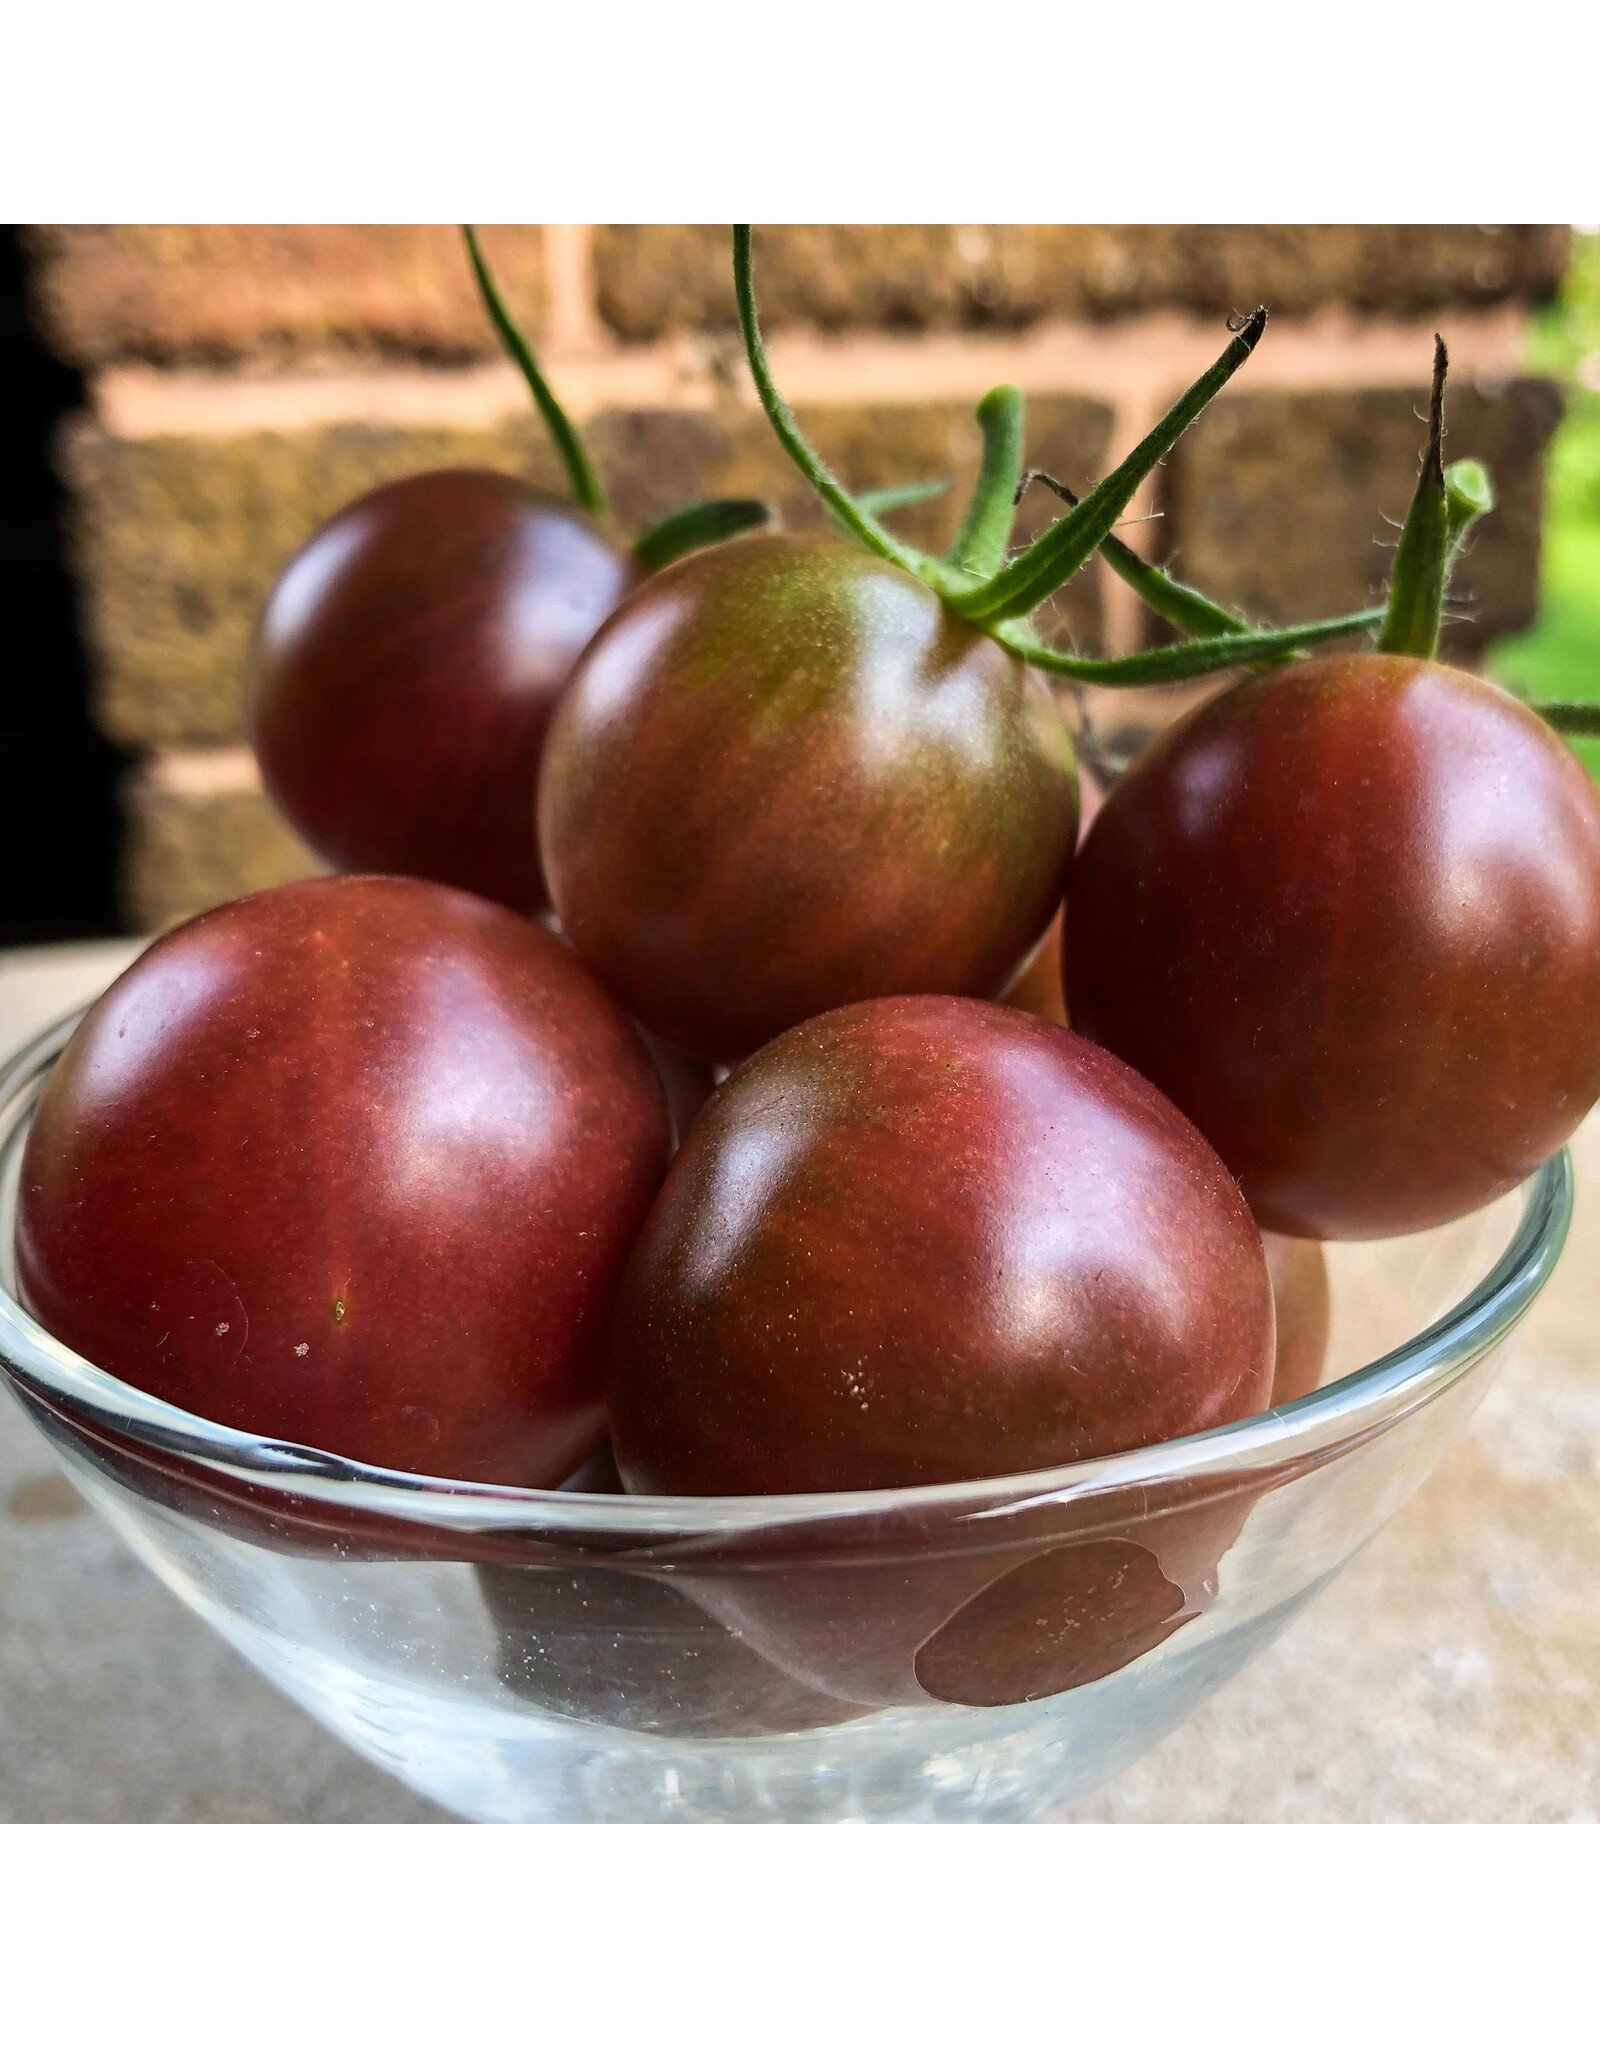 Seed Savers Tomato - Chocolate Cherry